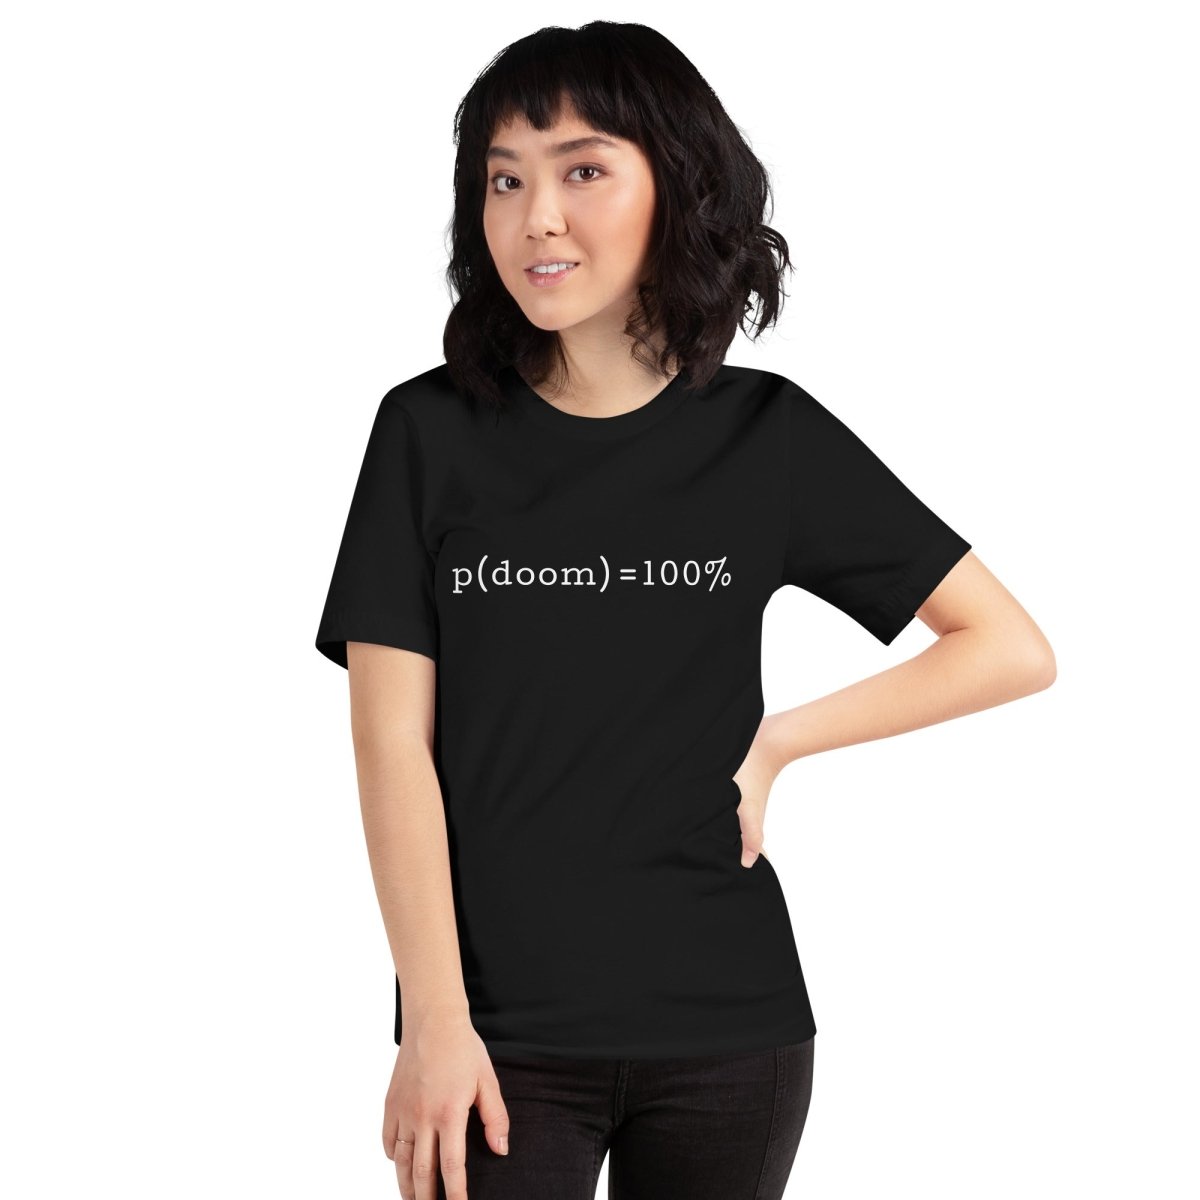 p(doom) = 100% T - Shirt (unisex) - Black - AI Store